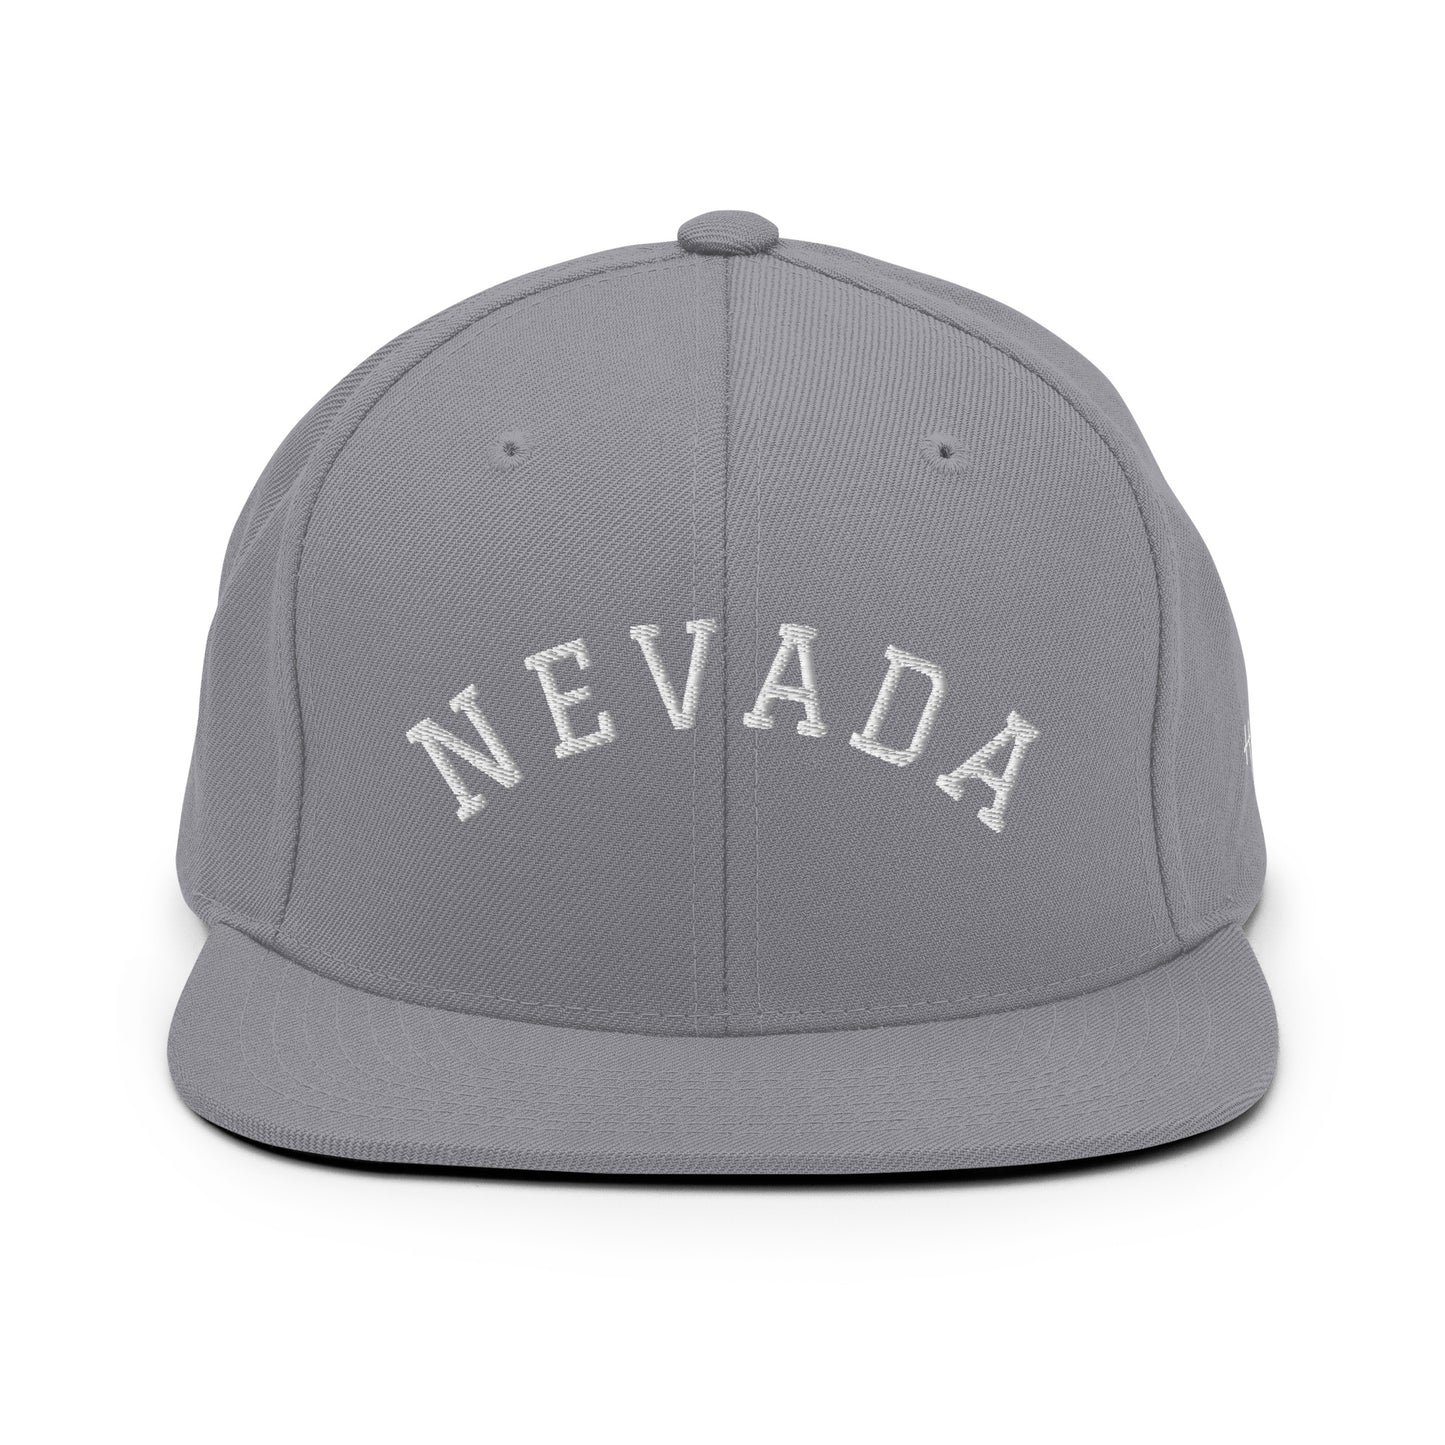 Nevada Arch 6 Panel Snapback Hat